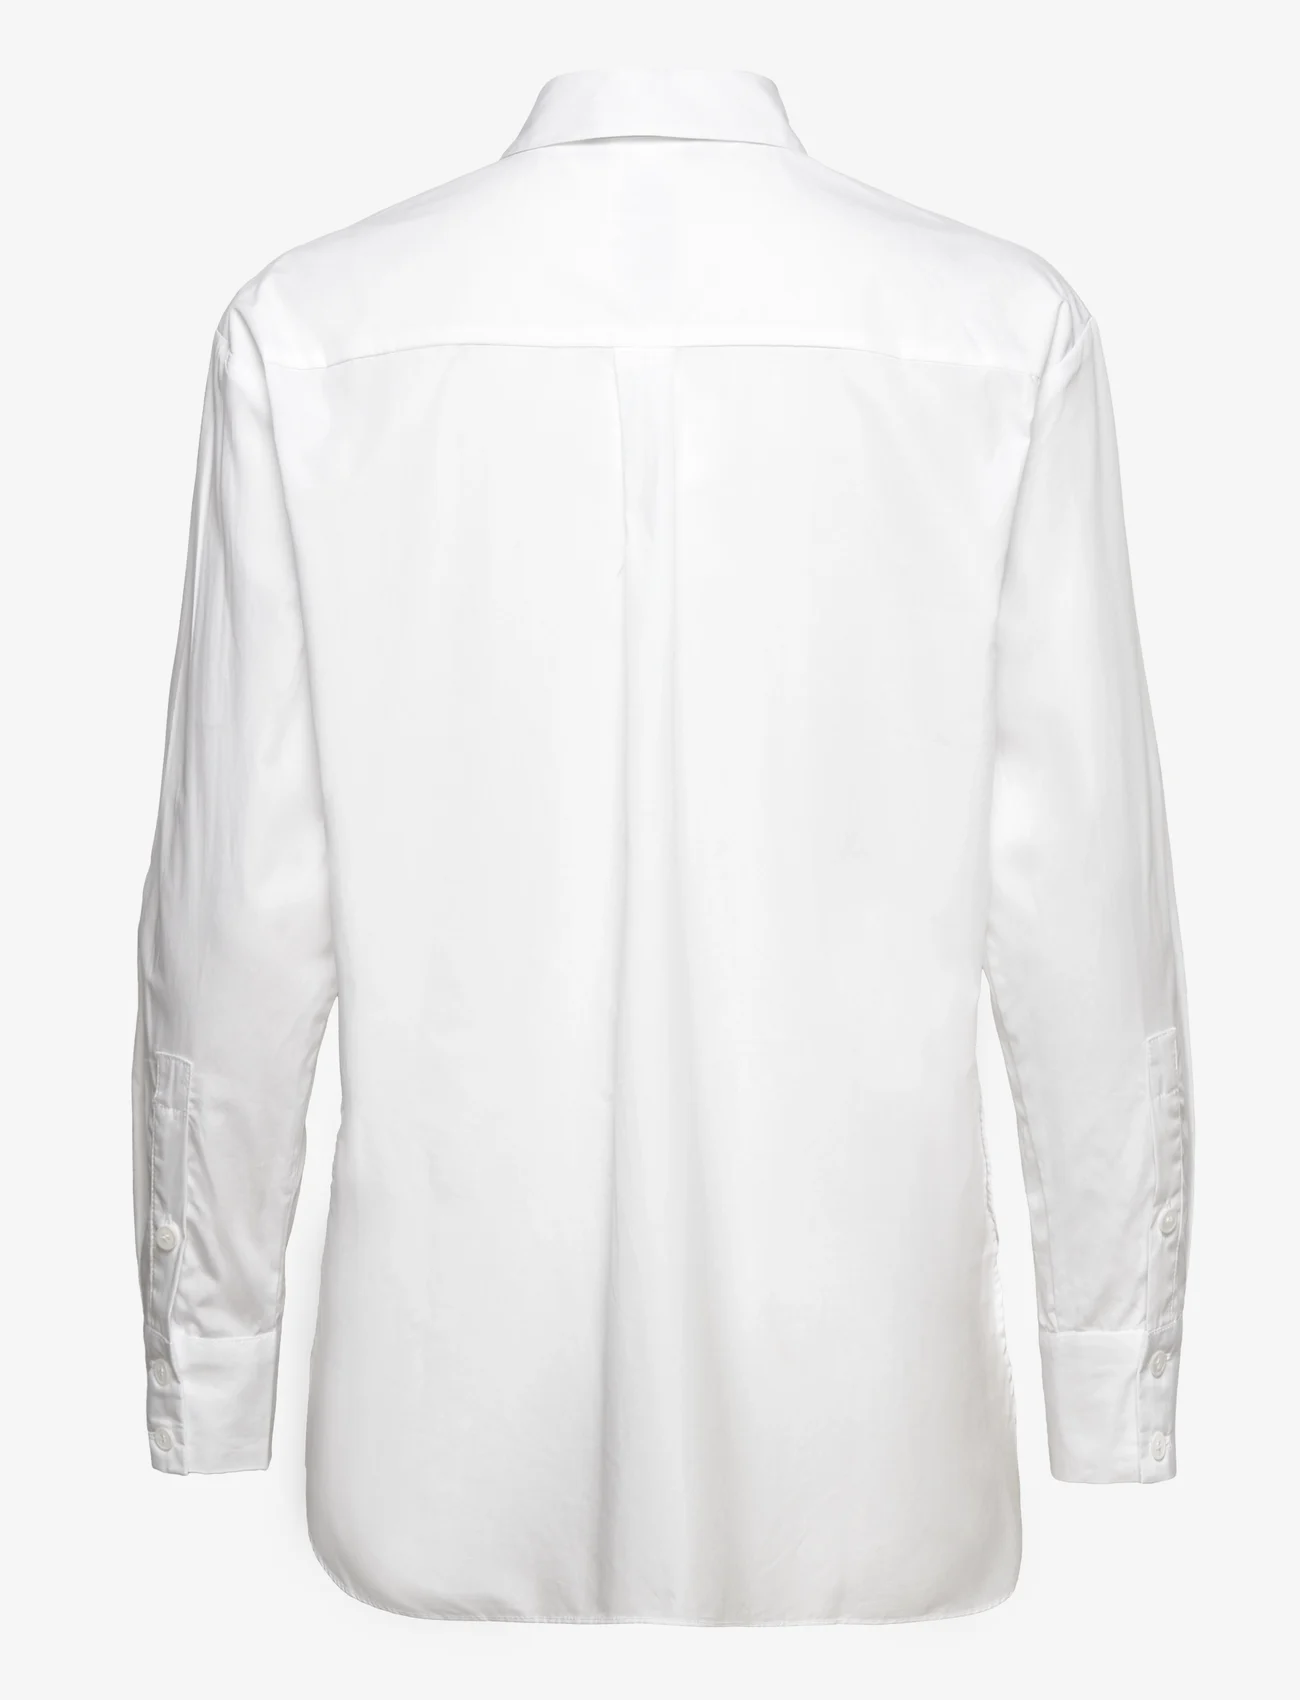 Max&Co. - BARI - långärmade skjortor - white - 1